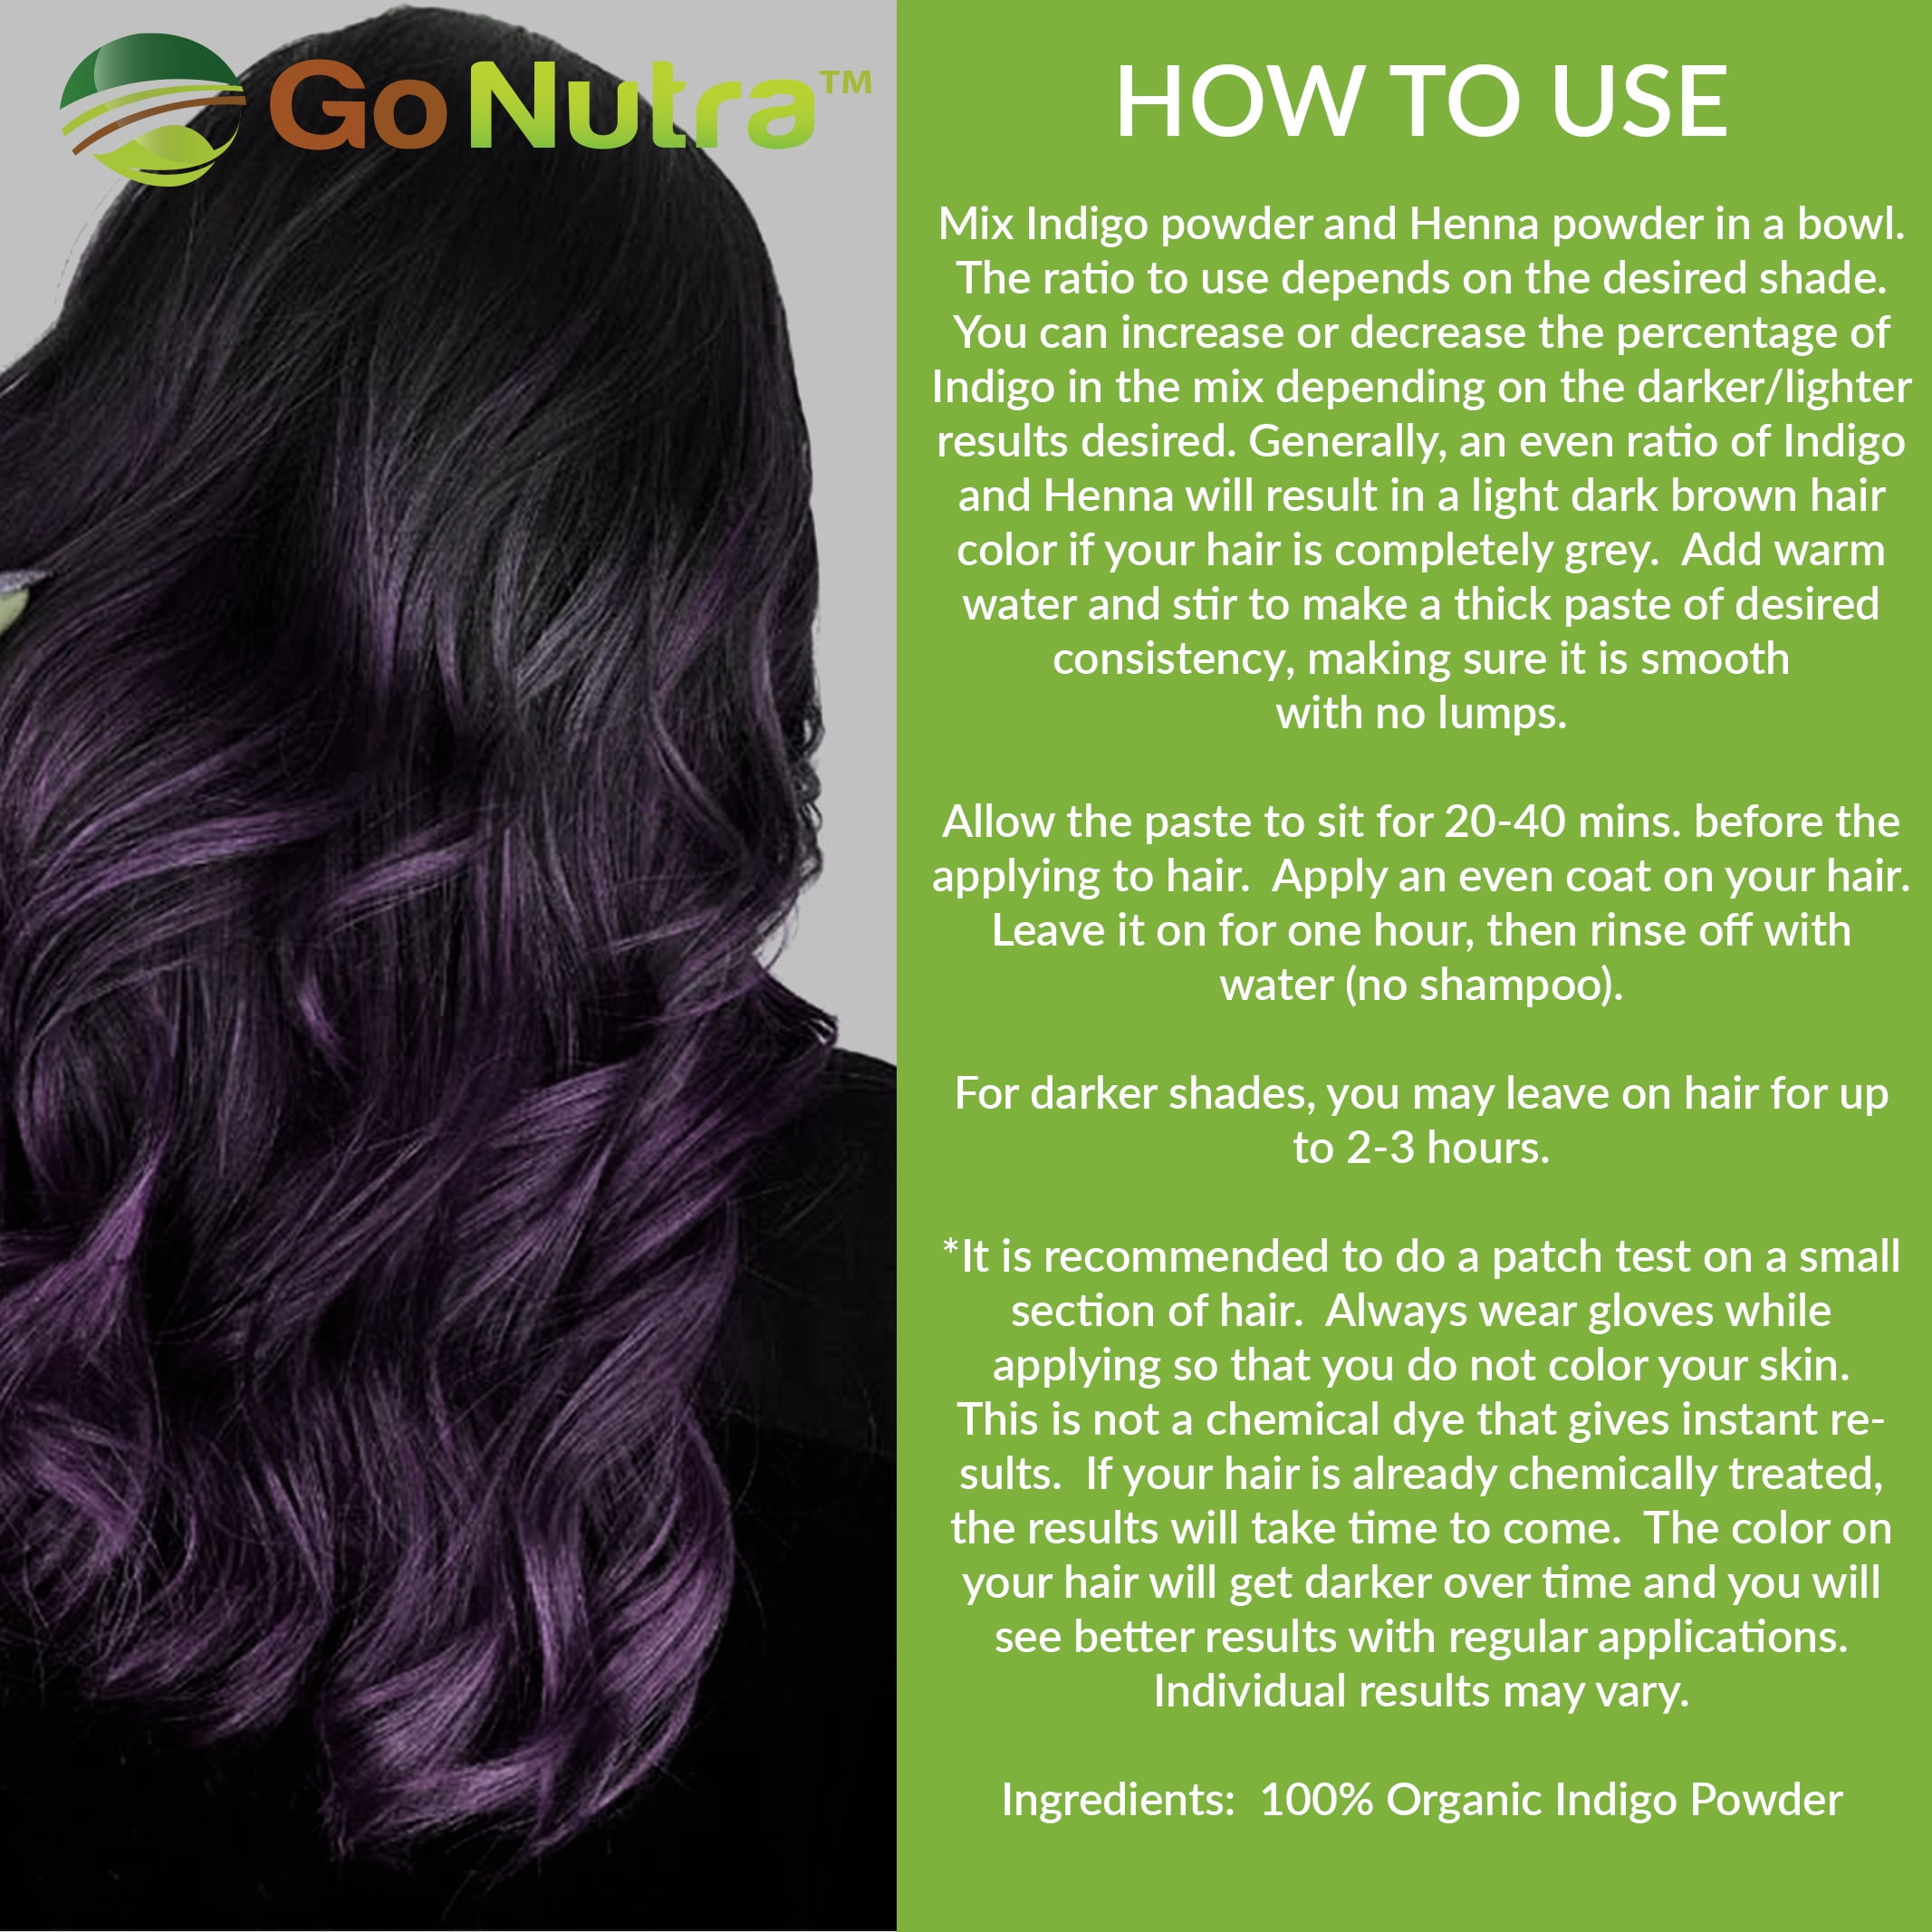 5 Top Hair Uses, Benefits & Side Effects Of Indigo Powder (Avuri) For Grey  Hair & Hair Growth - Wildturmeric